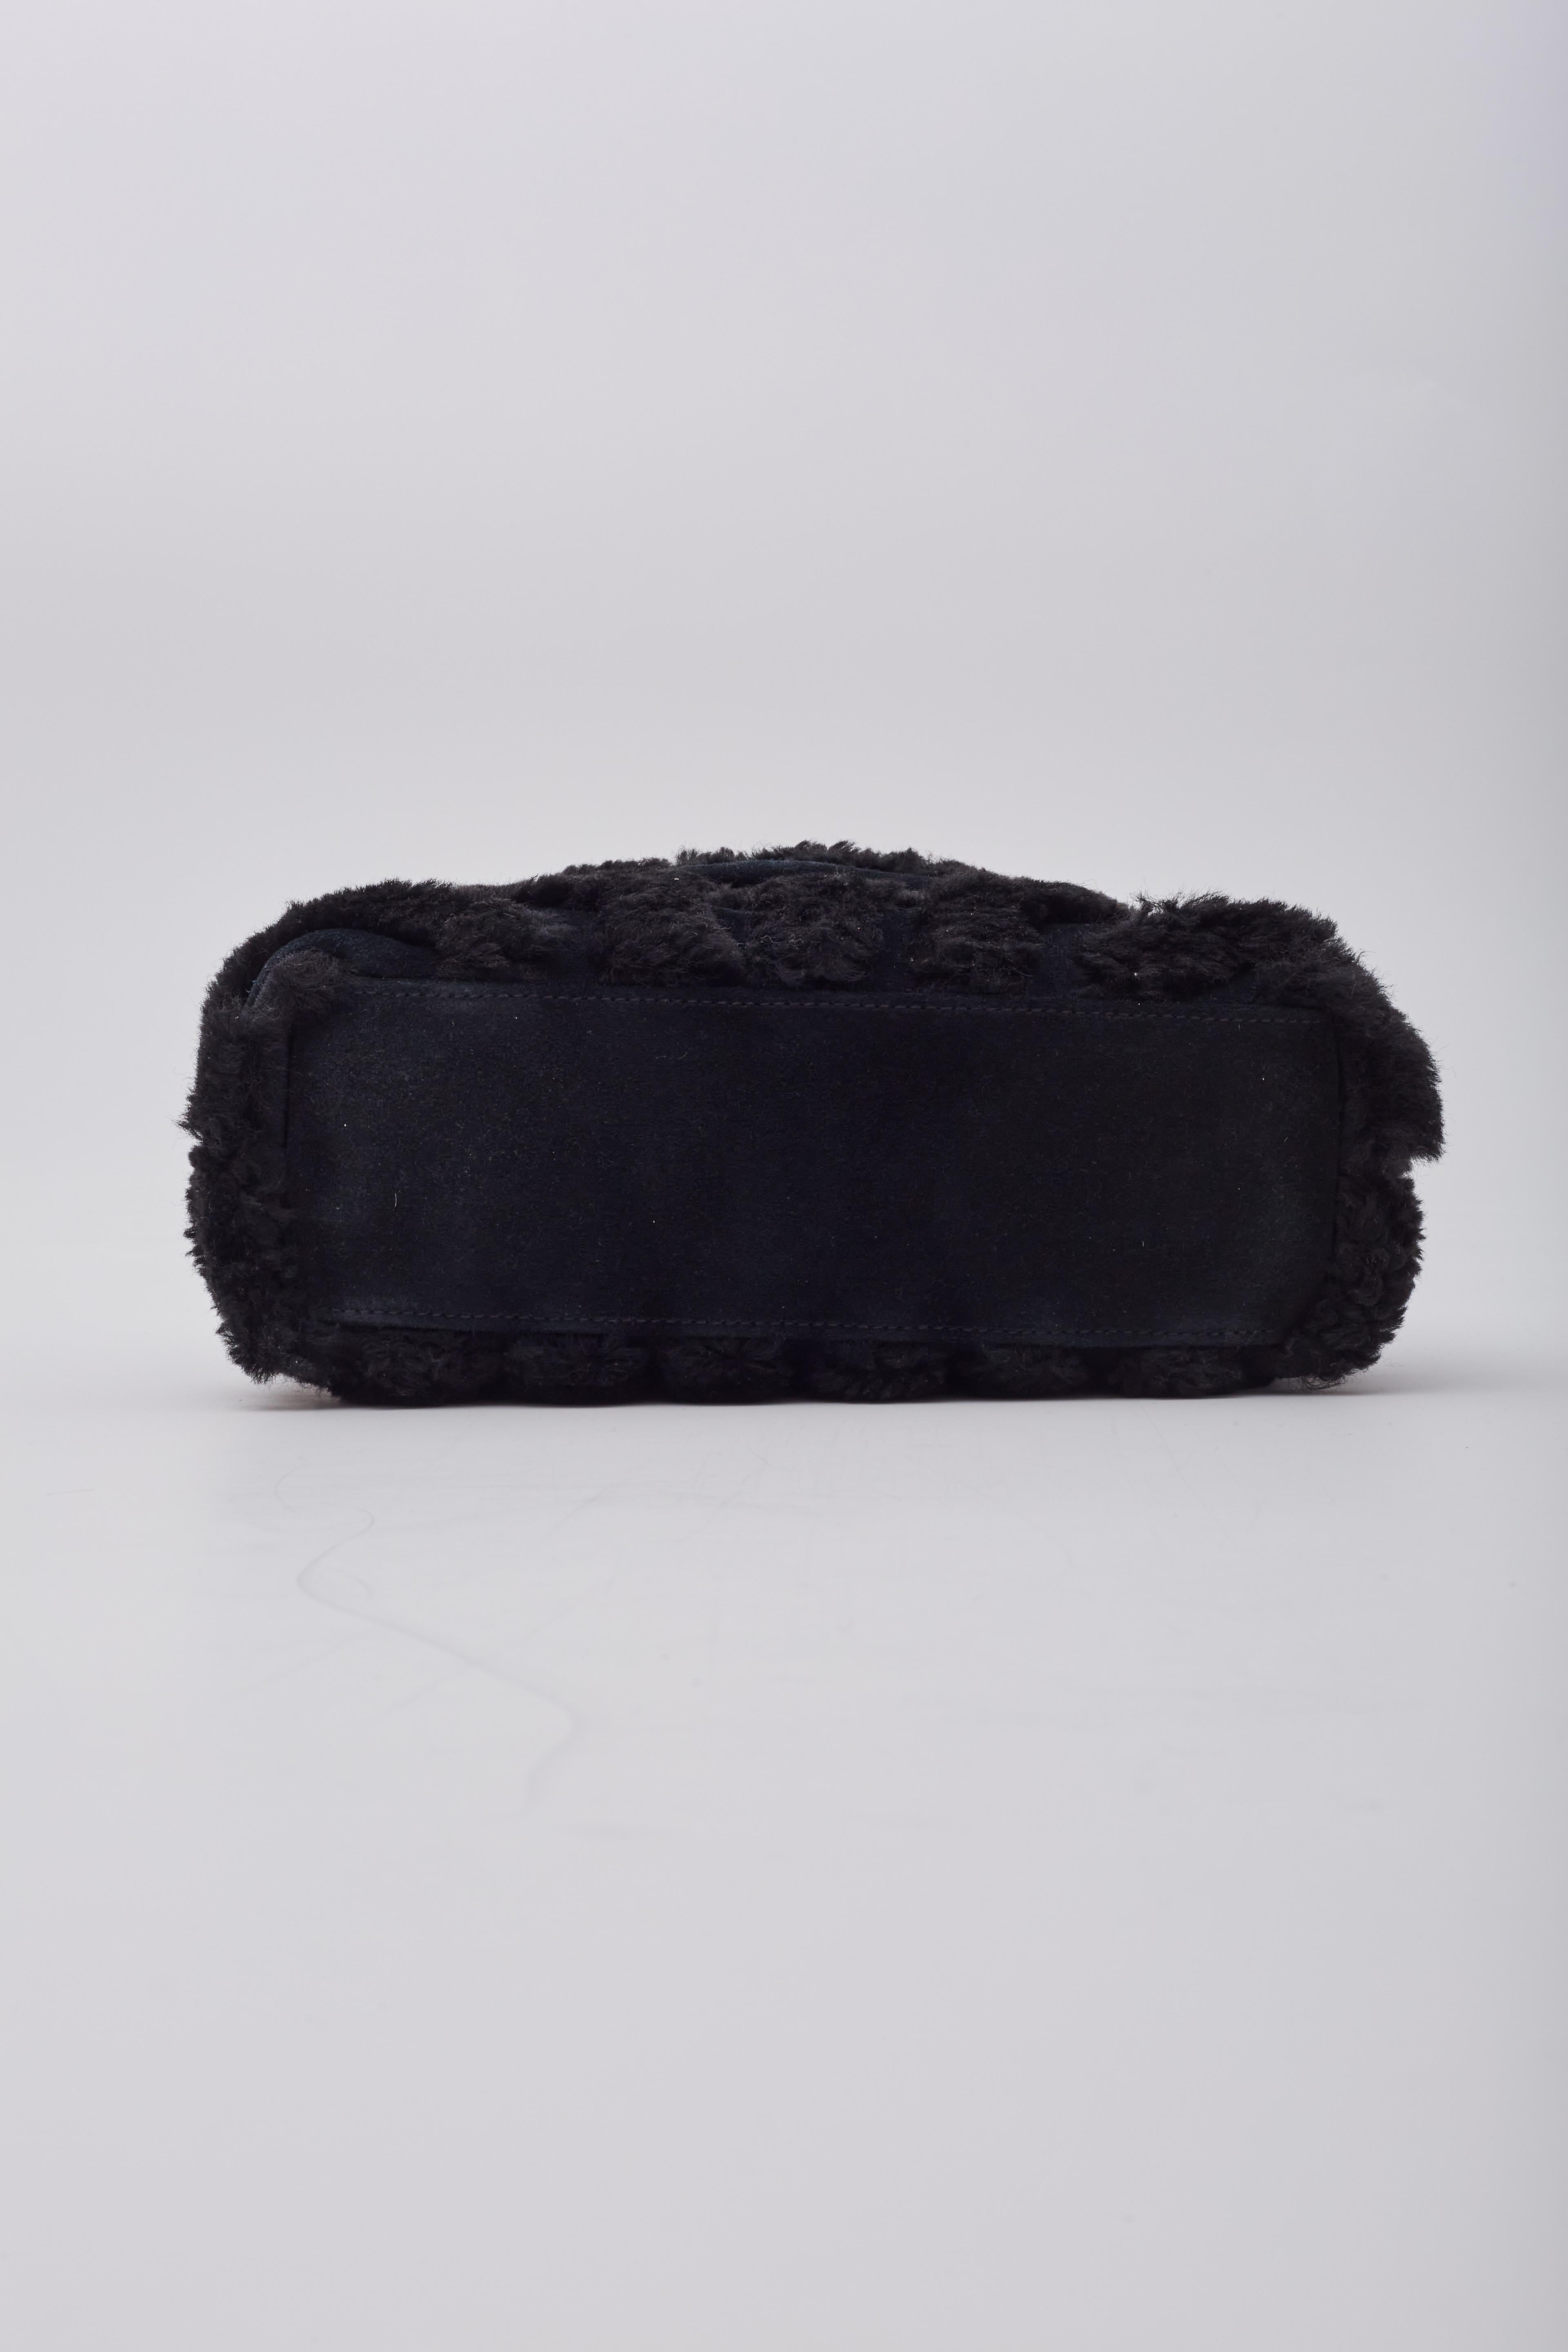 Saint Laurent Black Shearling Loulou Shoulder Bag Small For Sale 2